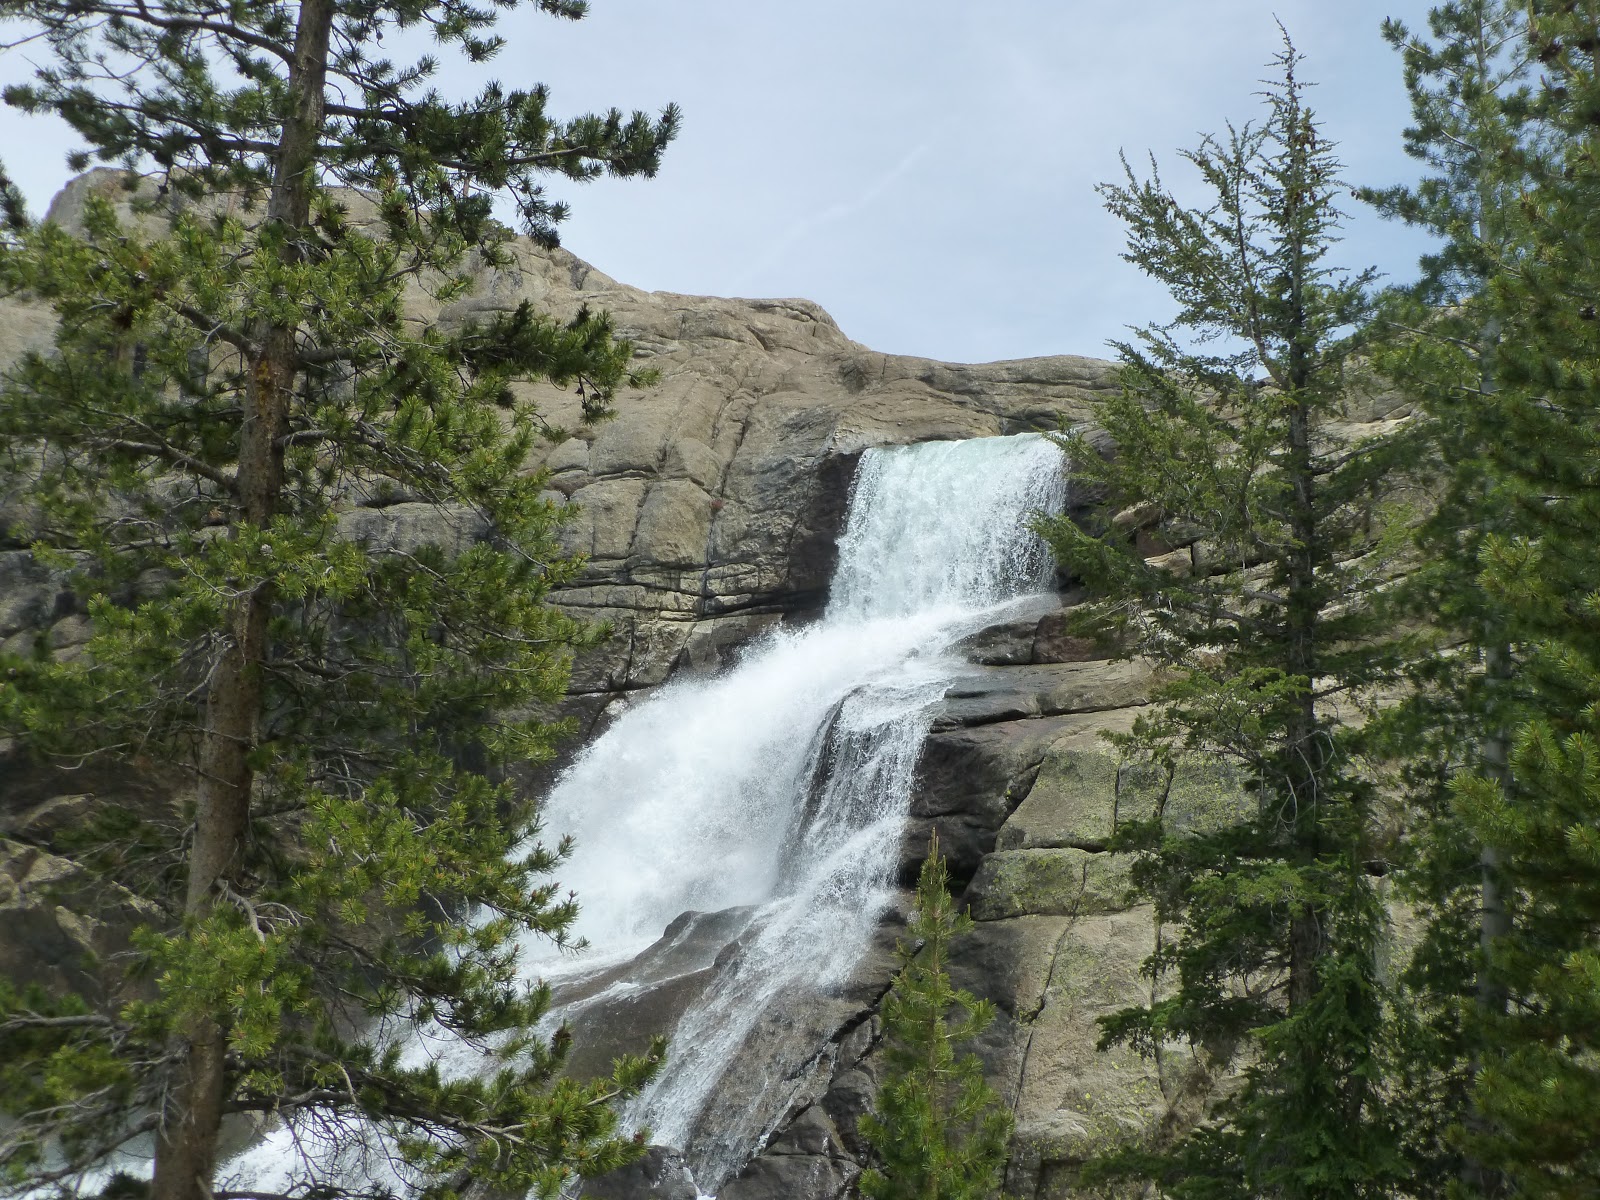 A cascade on the Tuolumne River, just before Glen Aulin High Sierra Camp